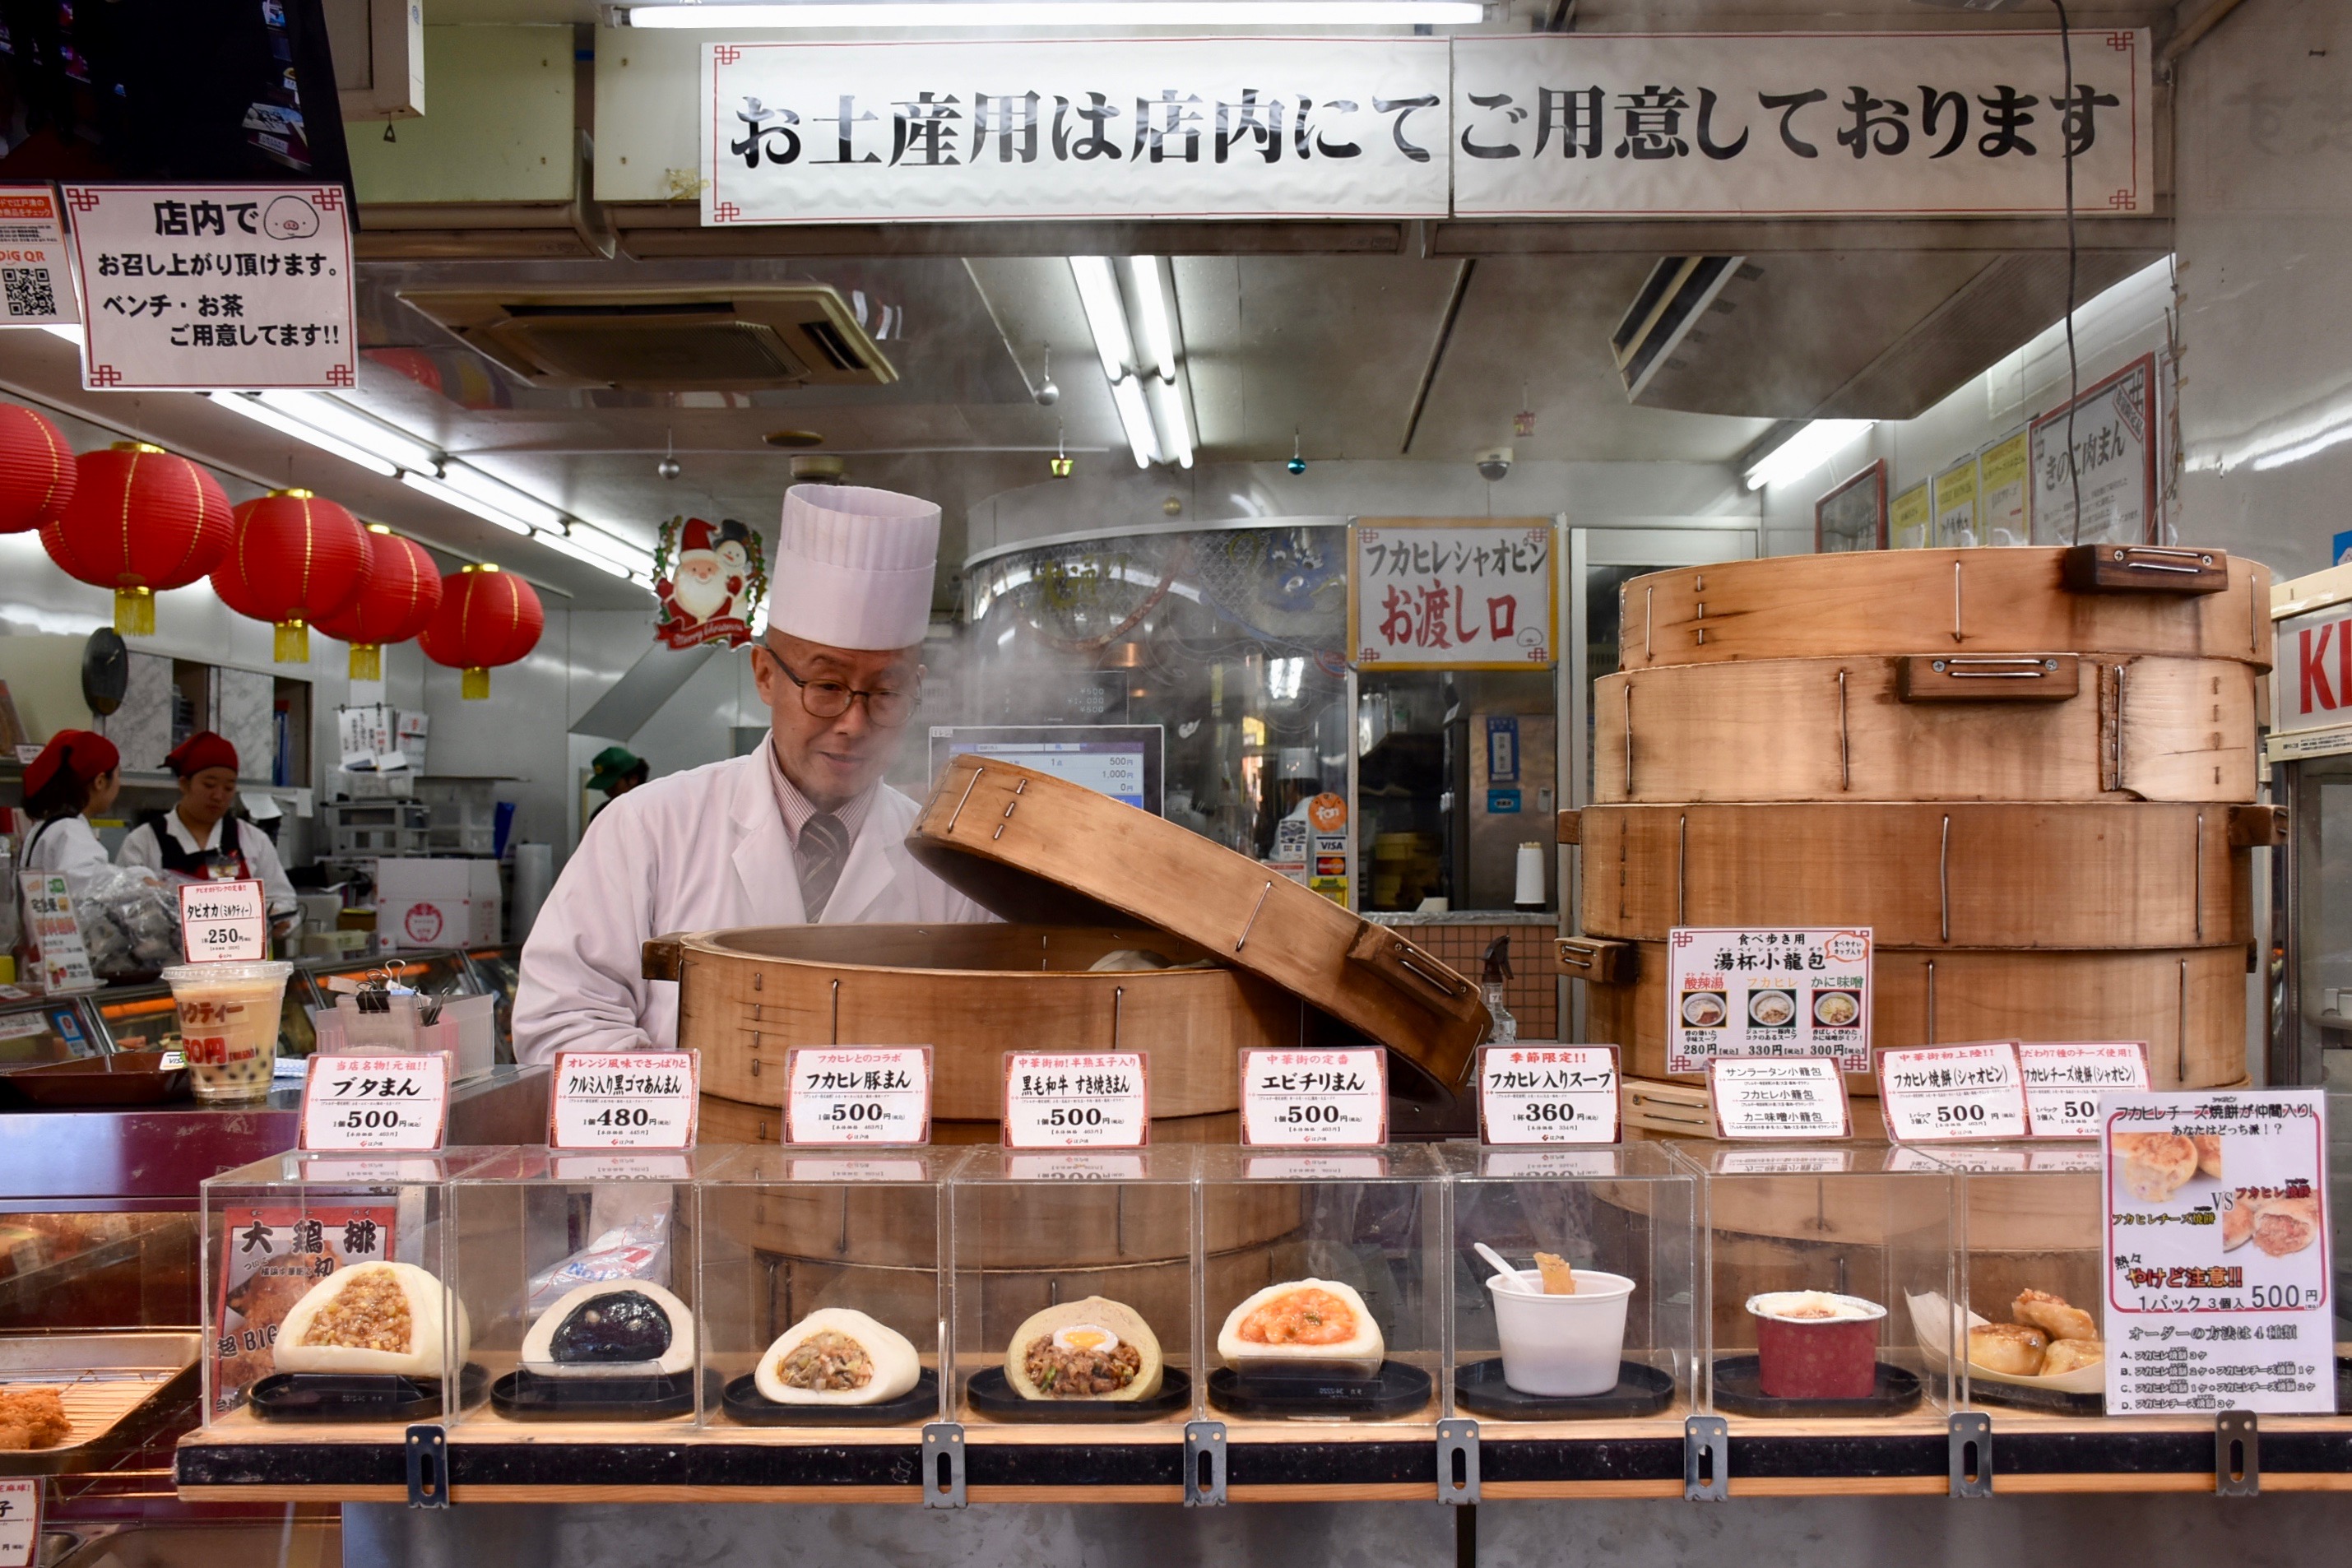 Chinese Culture and Street Food in Yokohama Chinatown - Kulture Kween